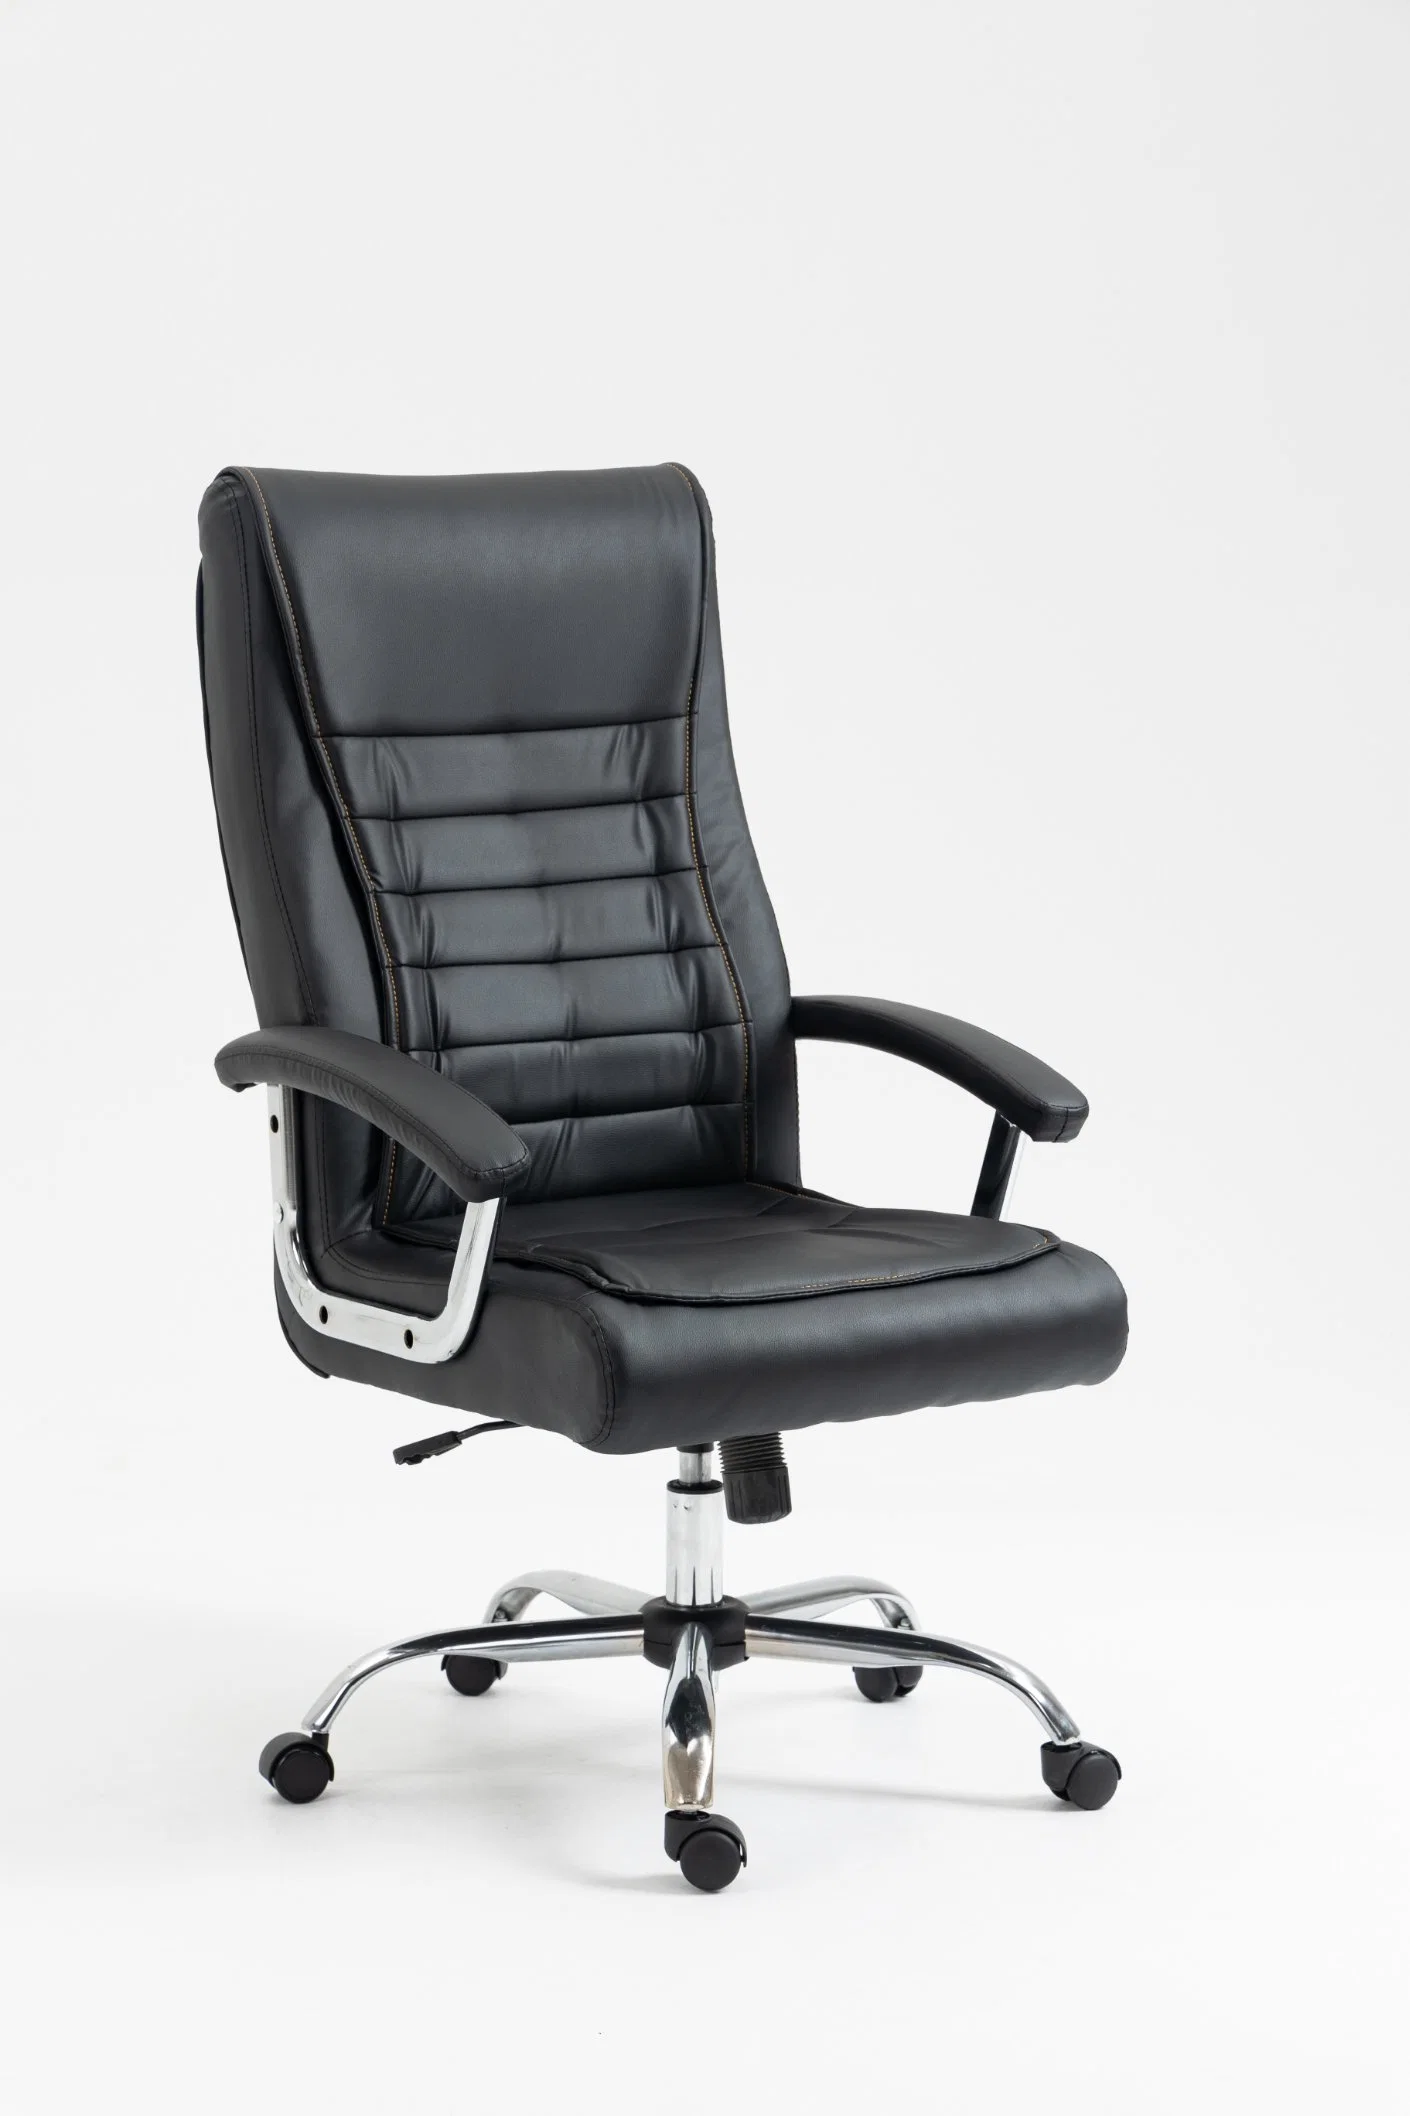 Chrome Arm Hot Selling Saudi Arabia Leather Office Chair